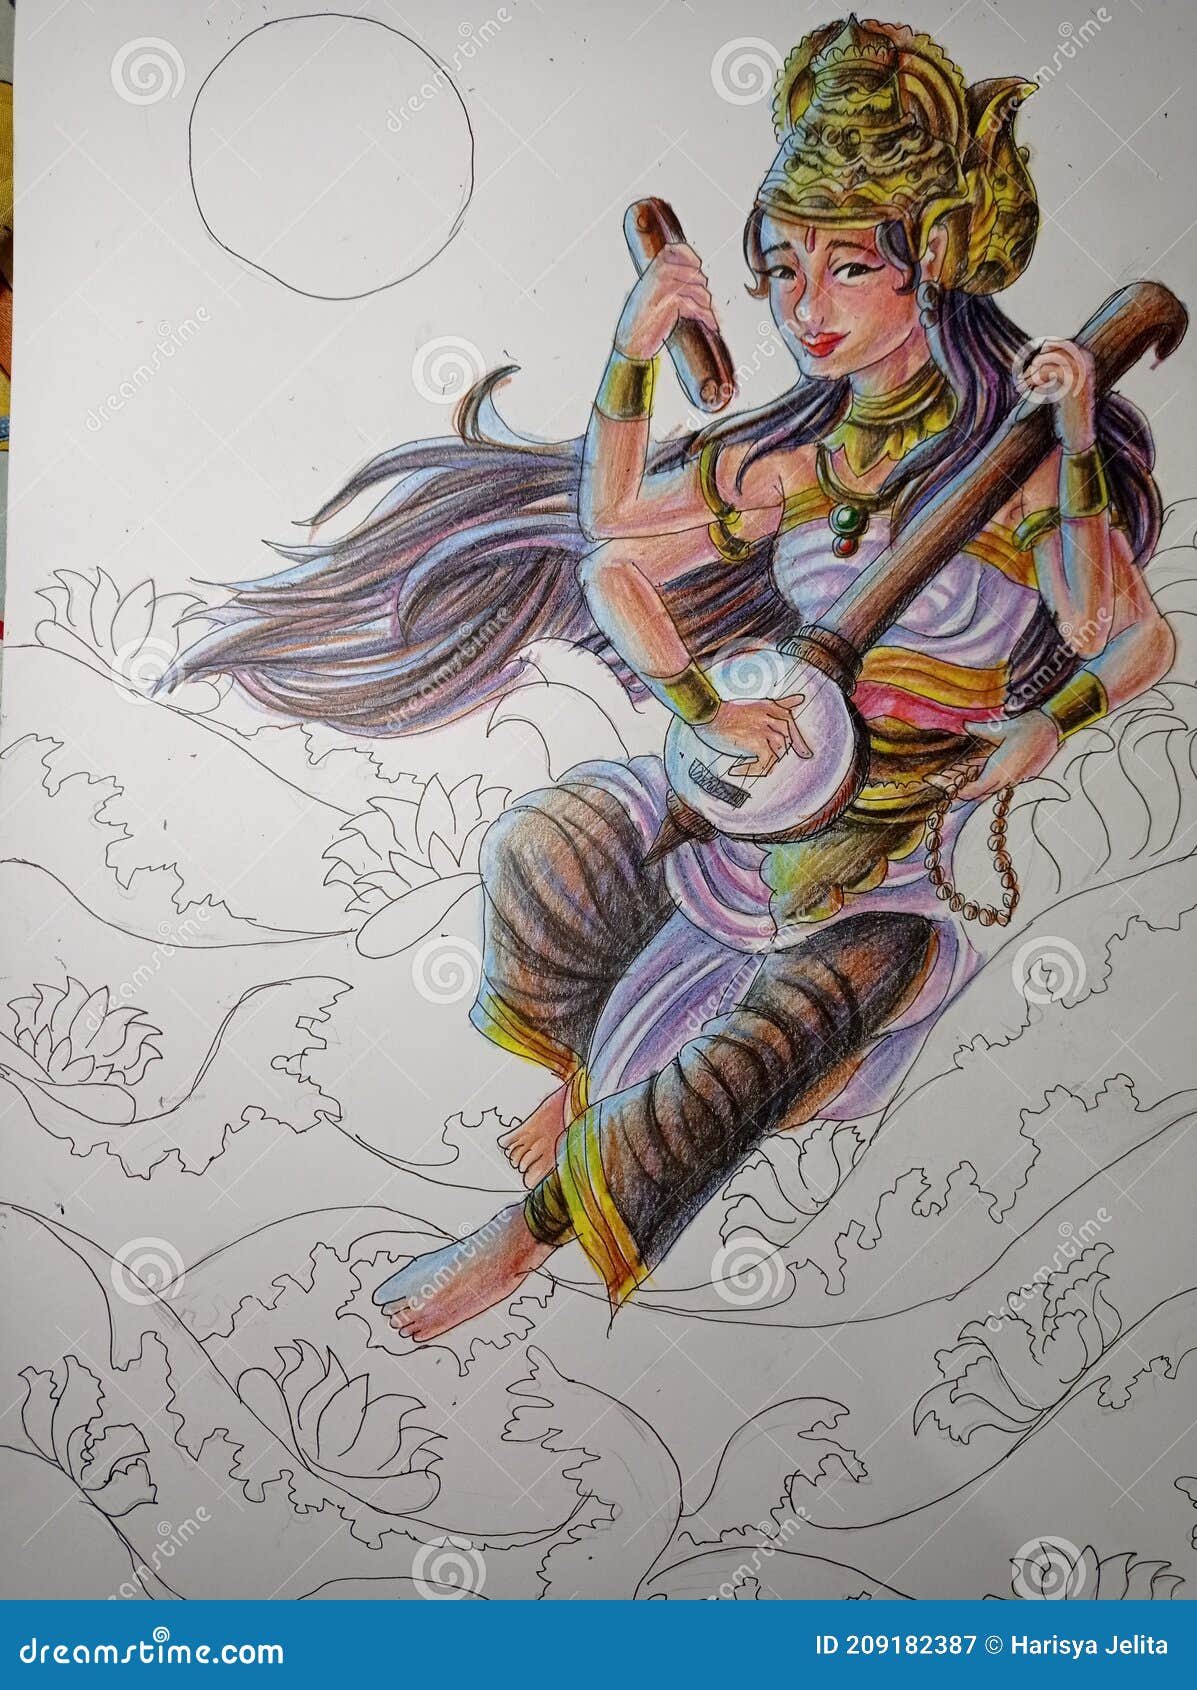 Maa saraswati - goddess of music. Indian goddess of music - maa saraswati  vector illustration. | CanStock